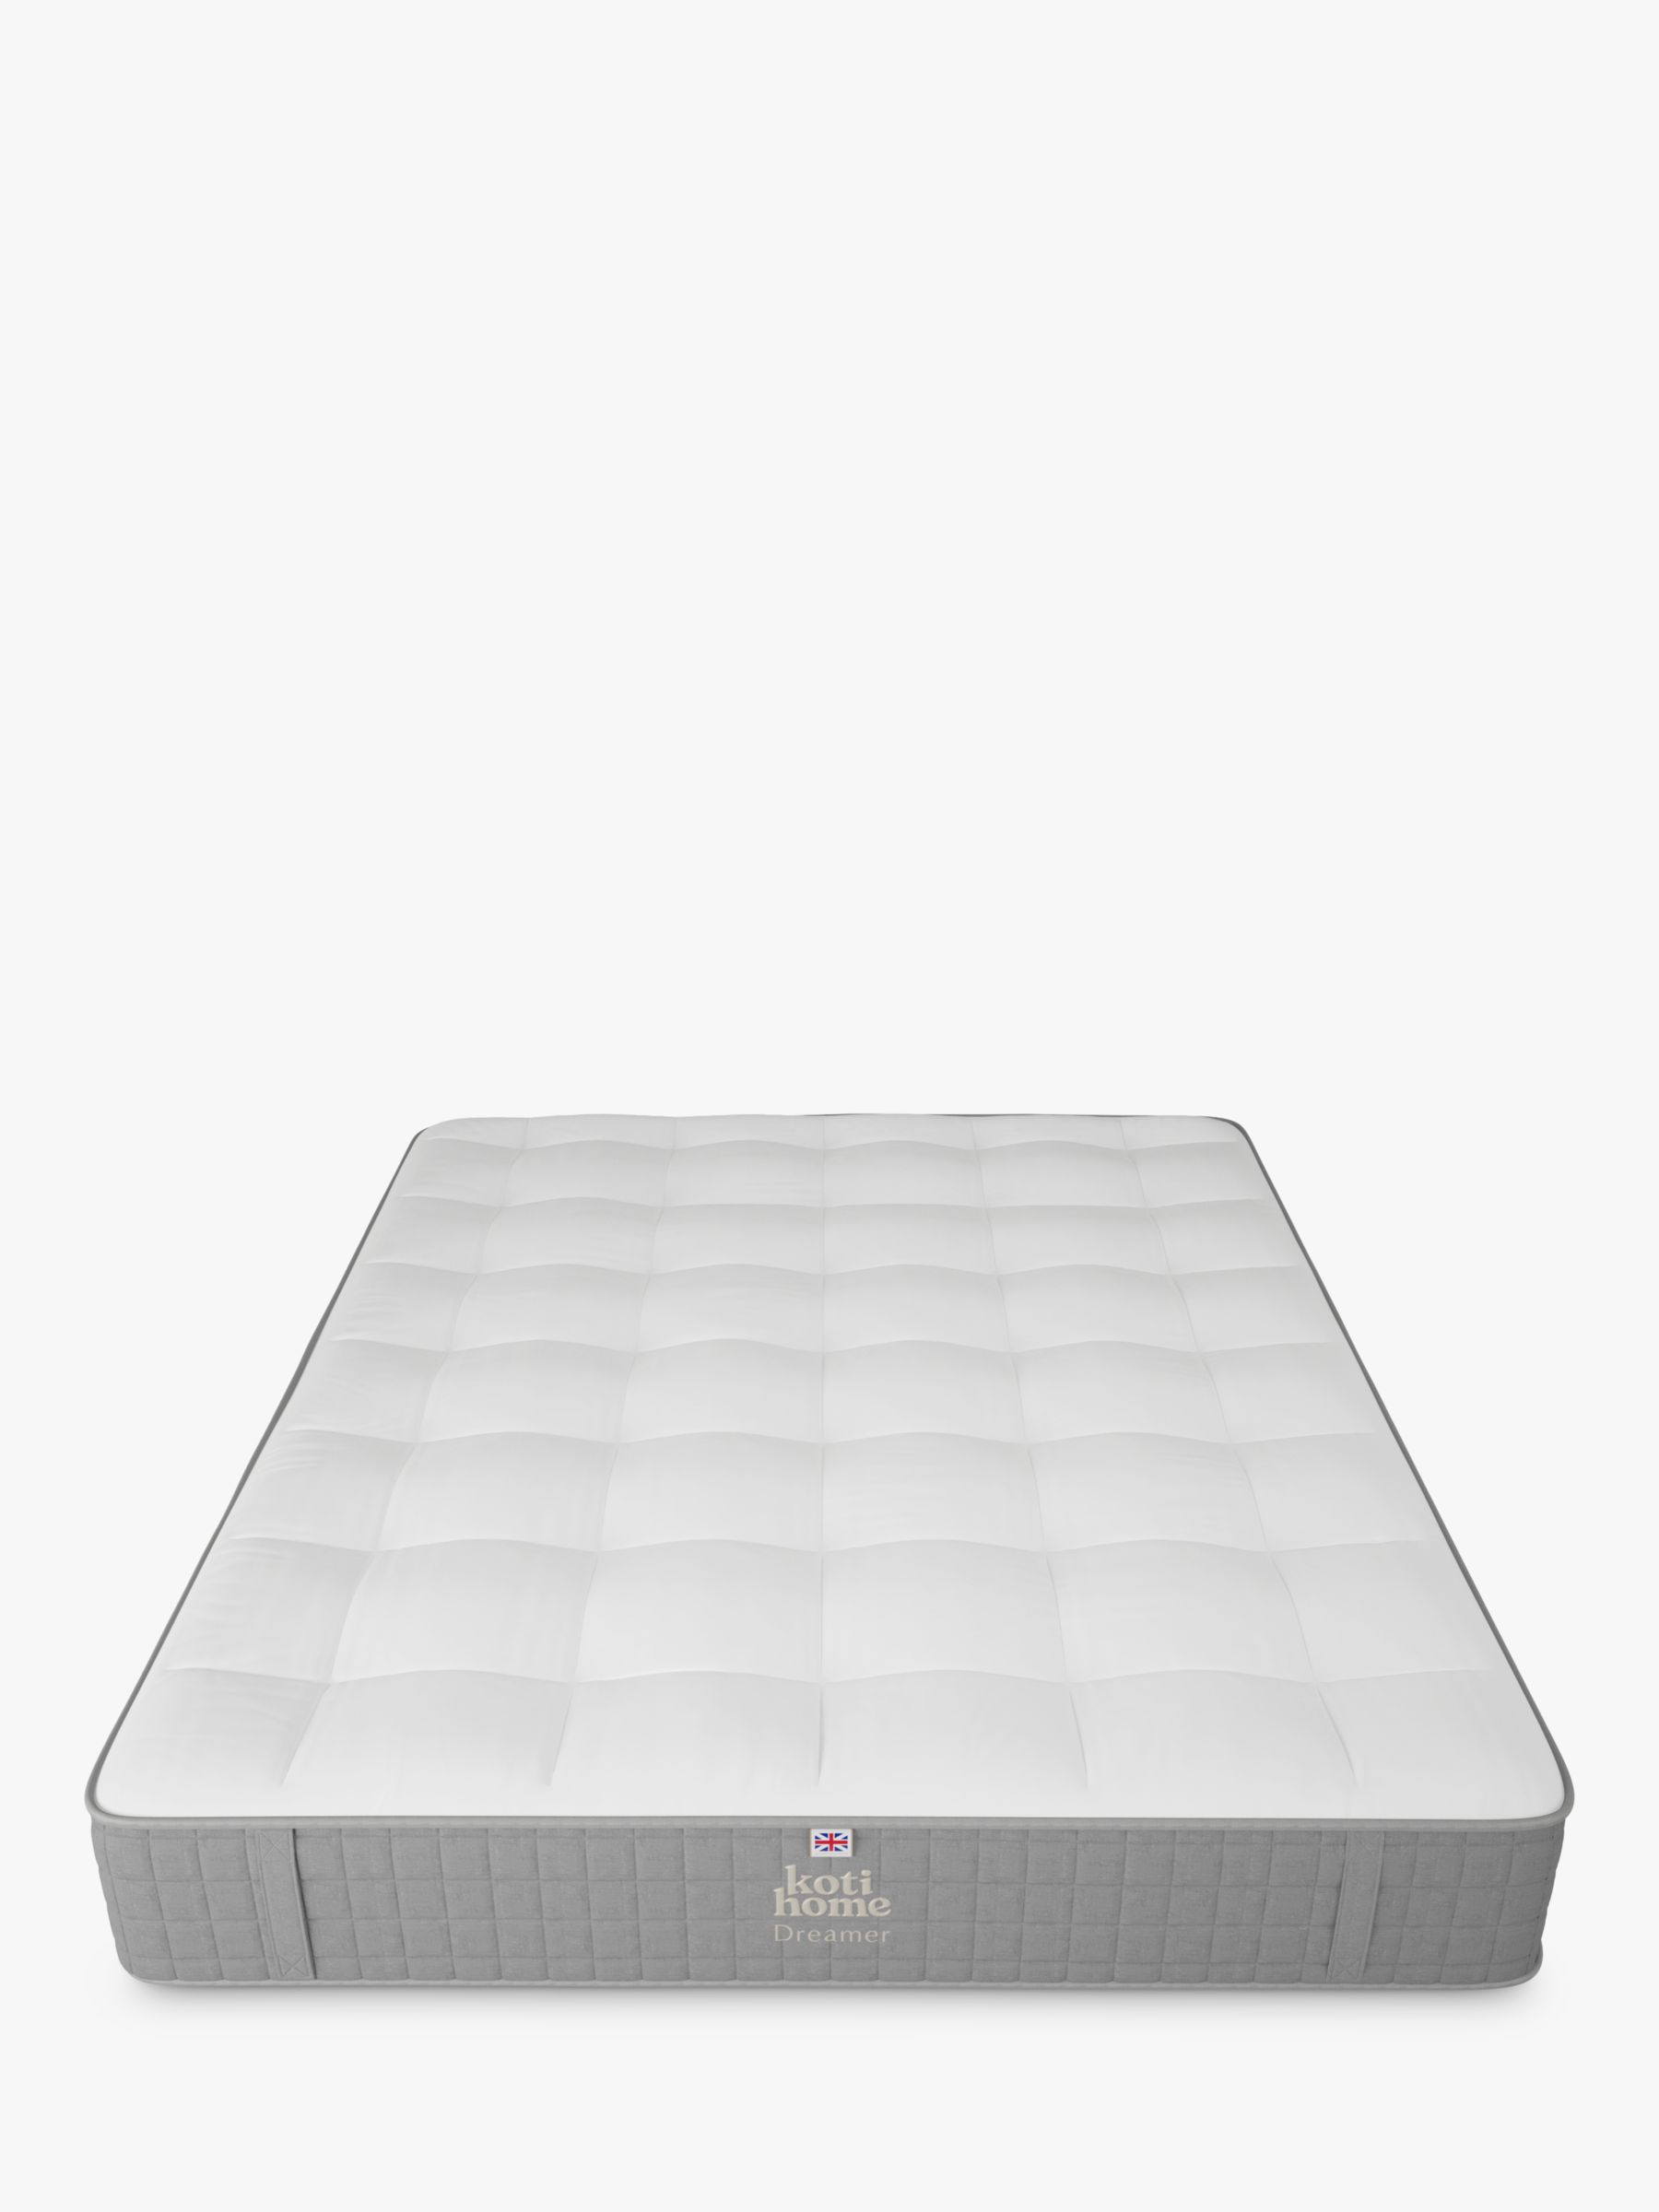 Photo of Koti home dreamer pocket spring mattress medium/firm support king size